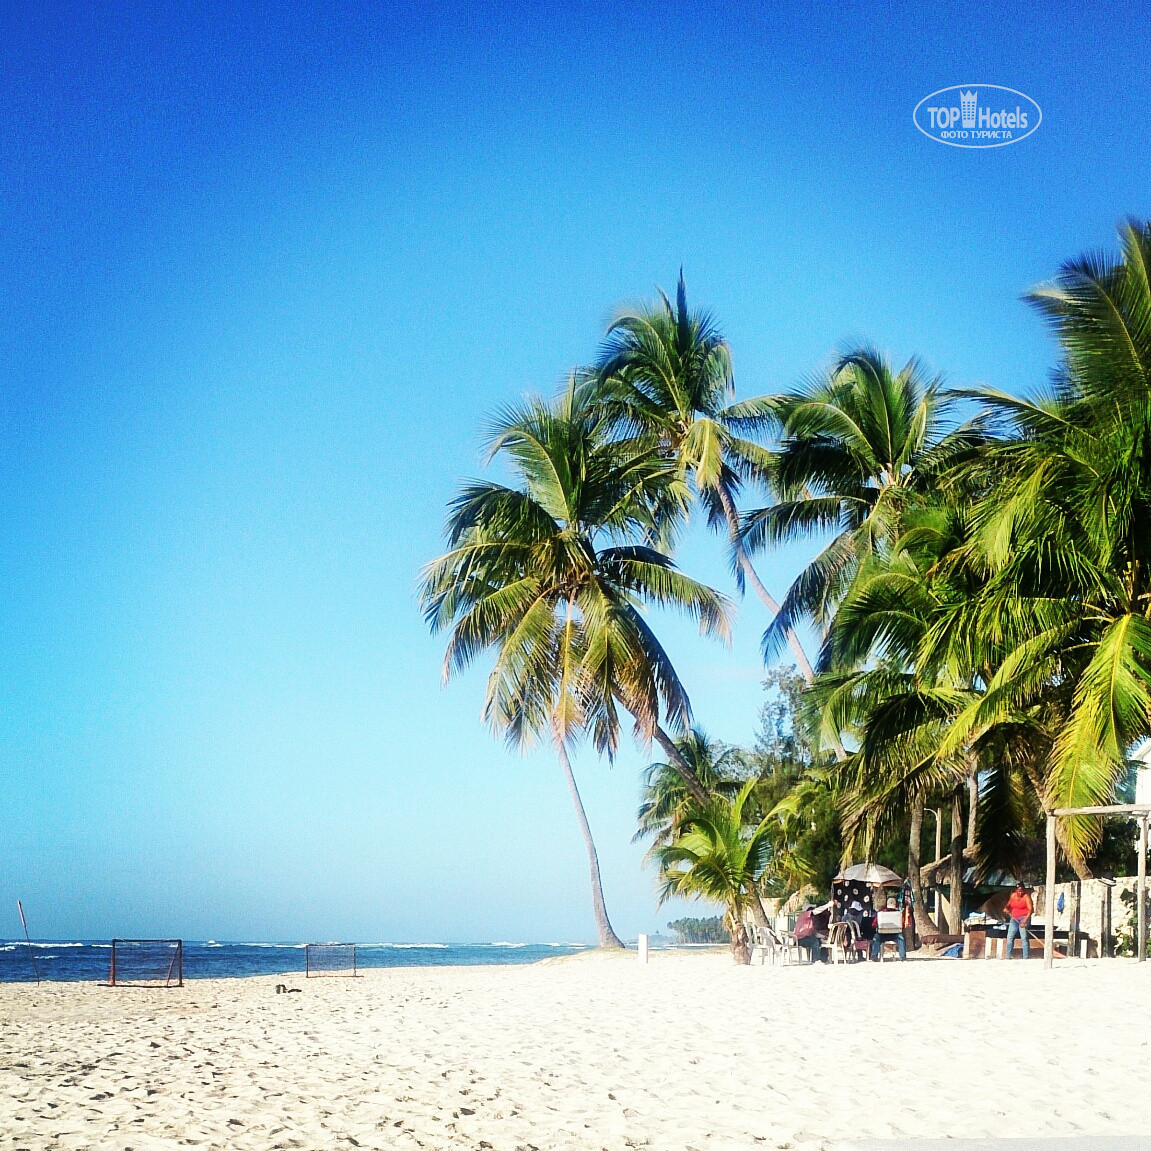 Costa caribe beach венесуэла. Коста Карибе Доминикана. Корал Коста Карибе 3 Доминикана. Costa Caribe 4 отель.